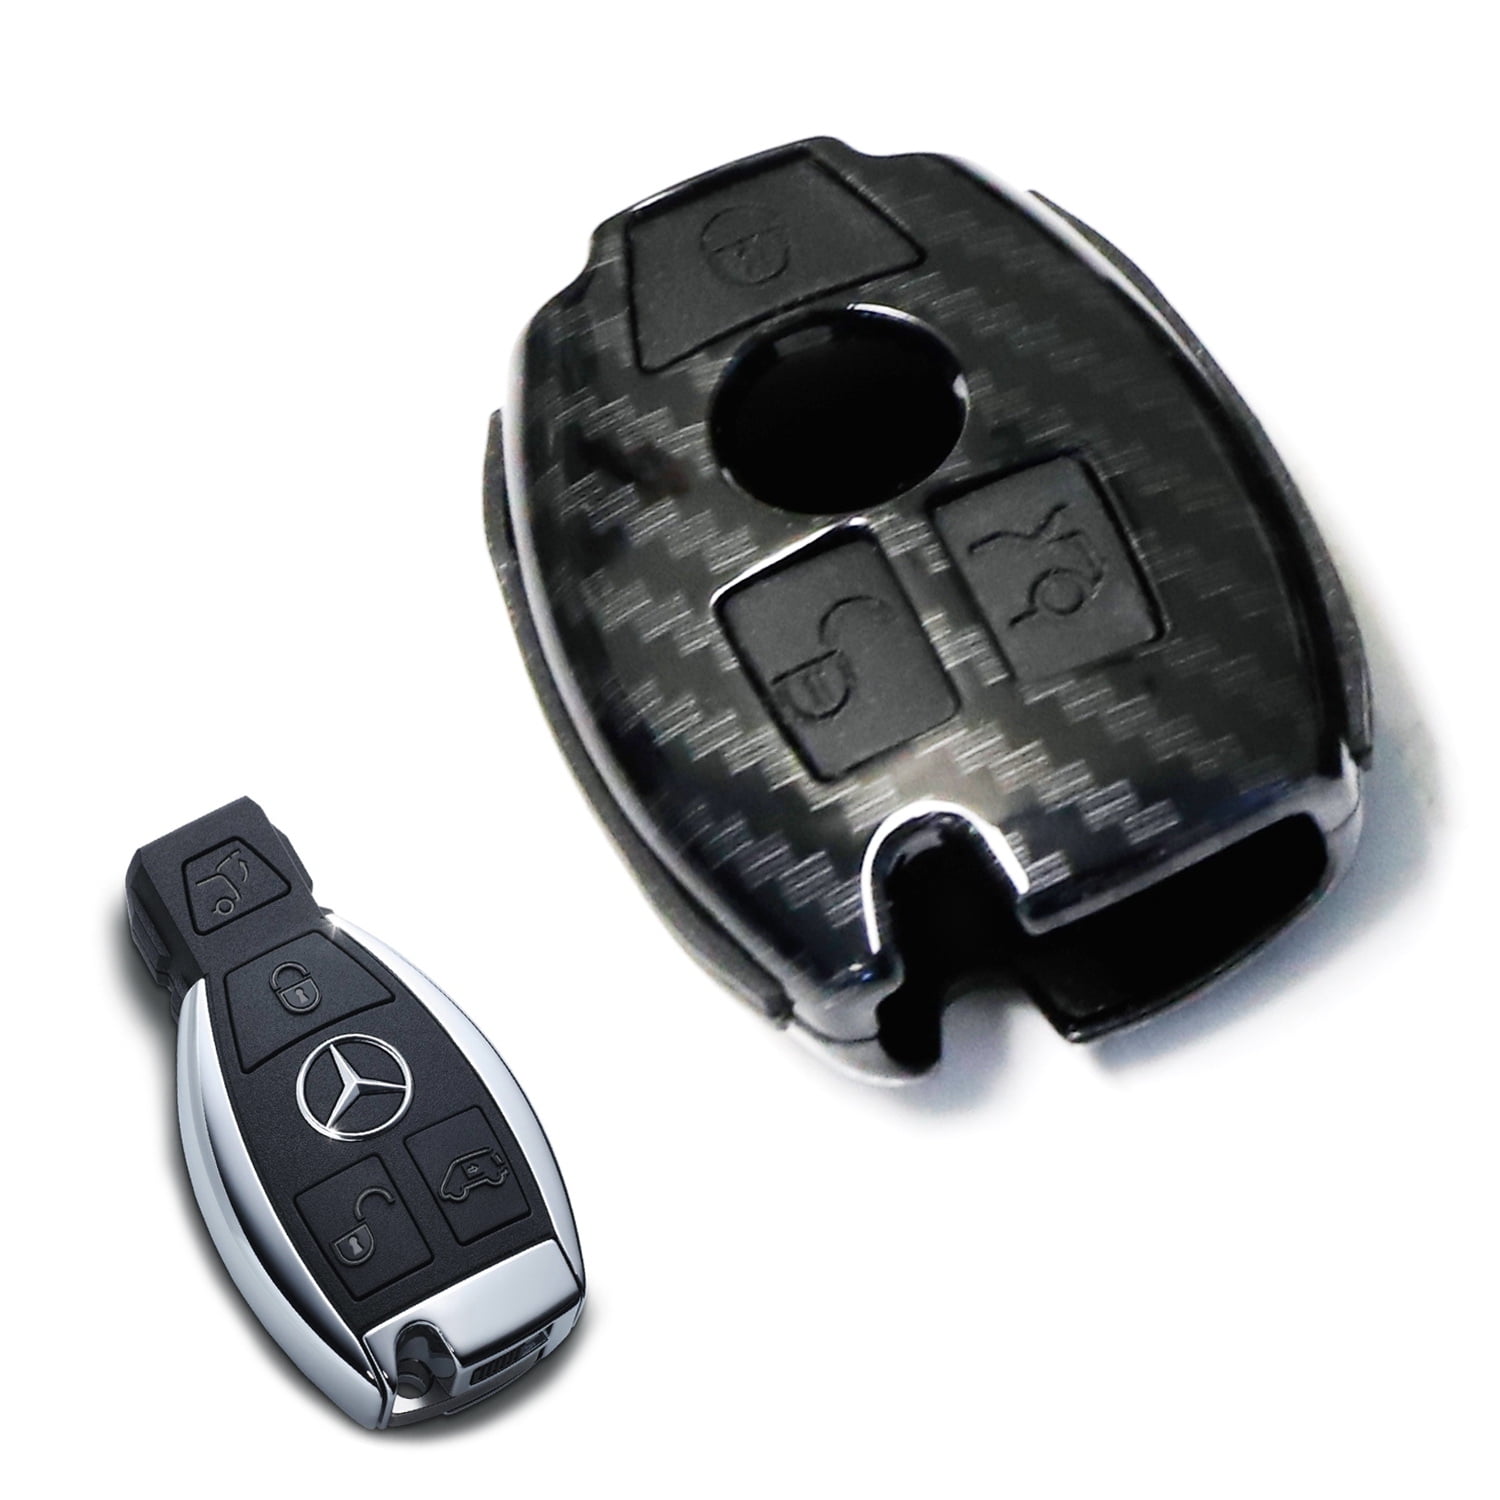 Black 4 Button Remote Key Fob Silicone Skin Case Cover Fit Mercedes Benz C Class 